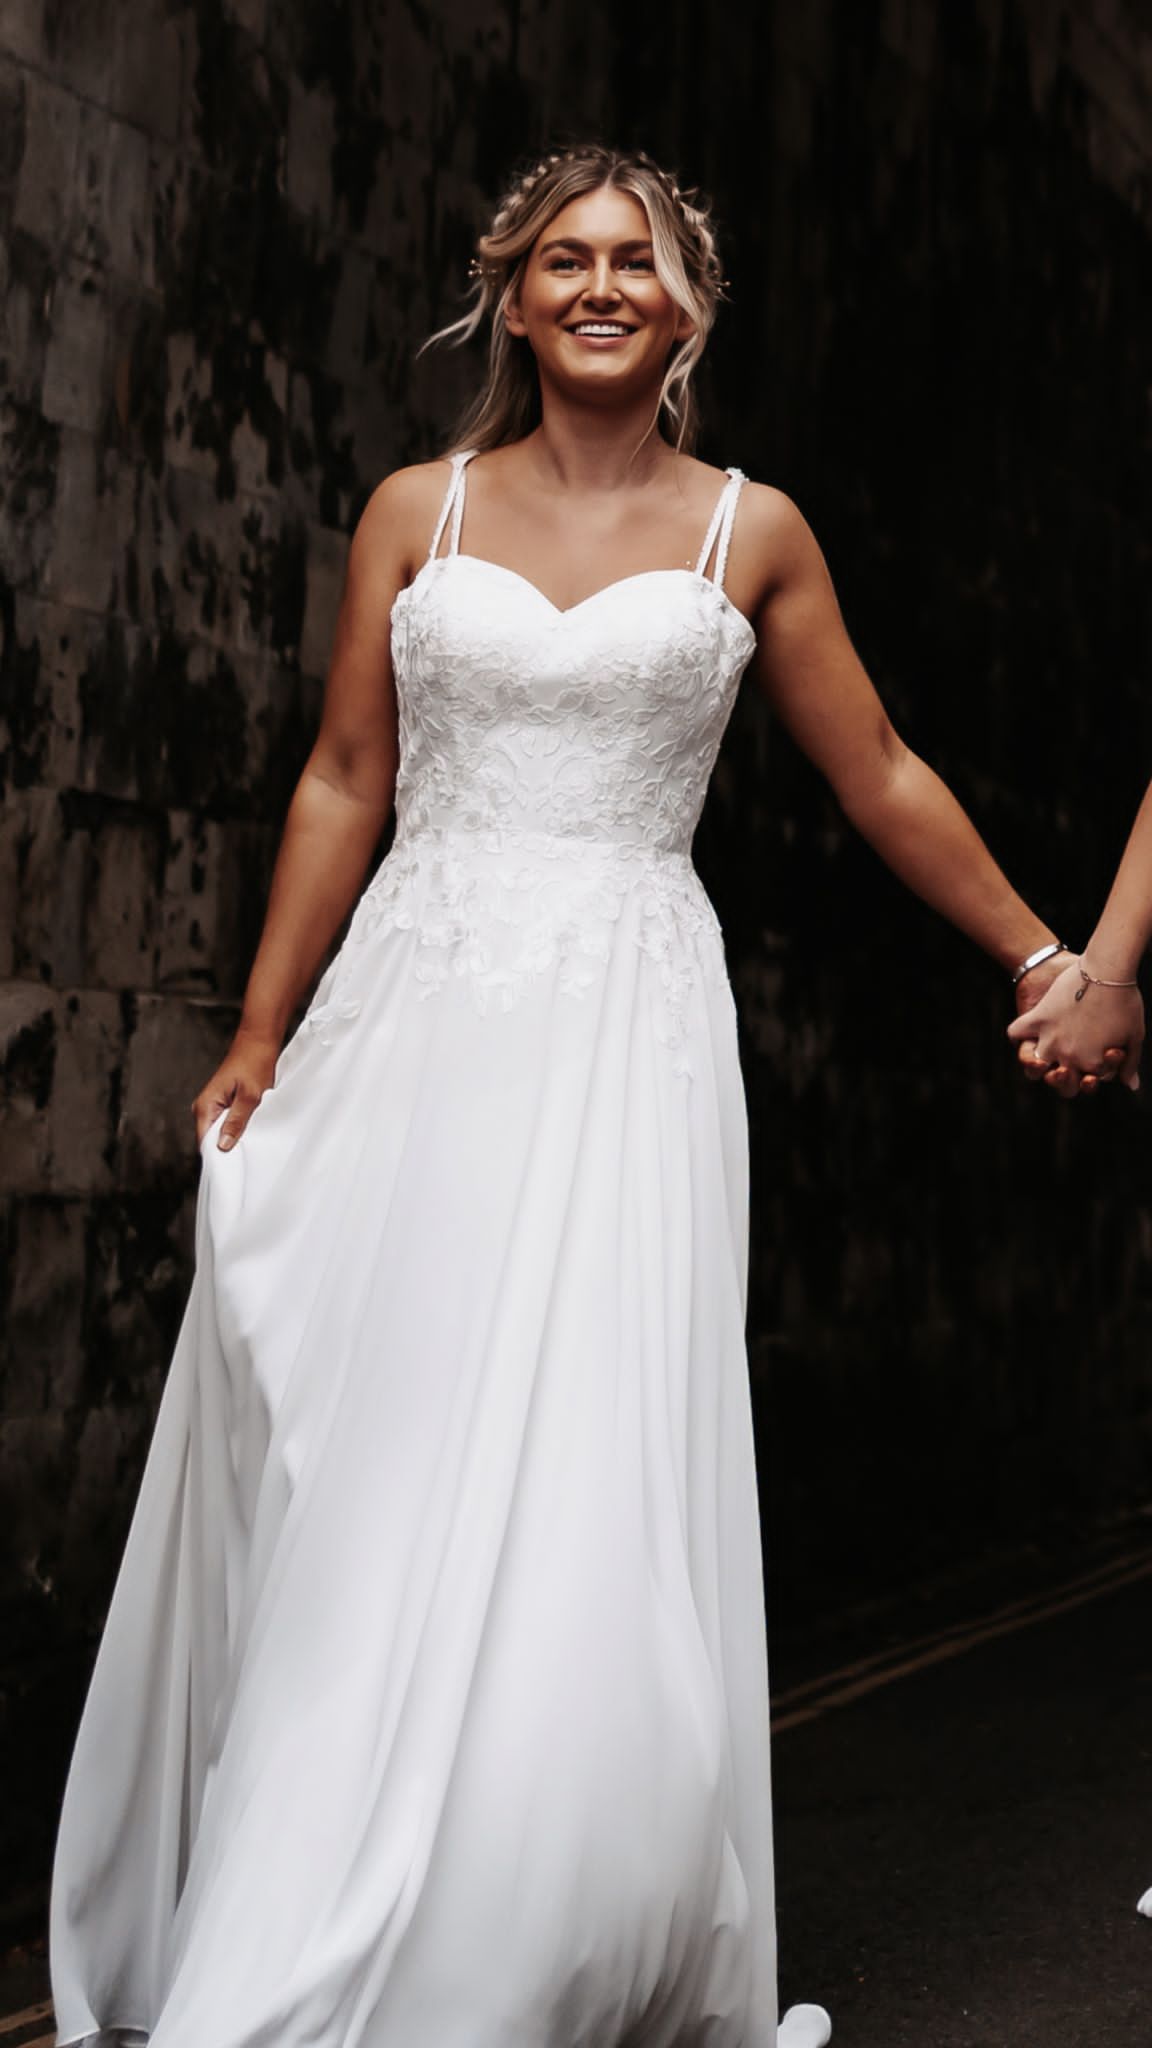 Best Dress 2 Impress Bridal-Image-51